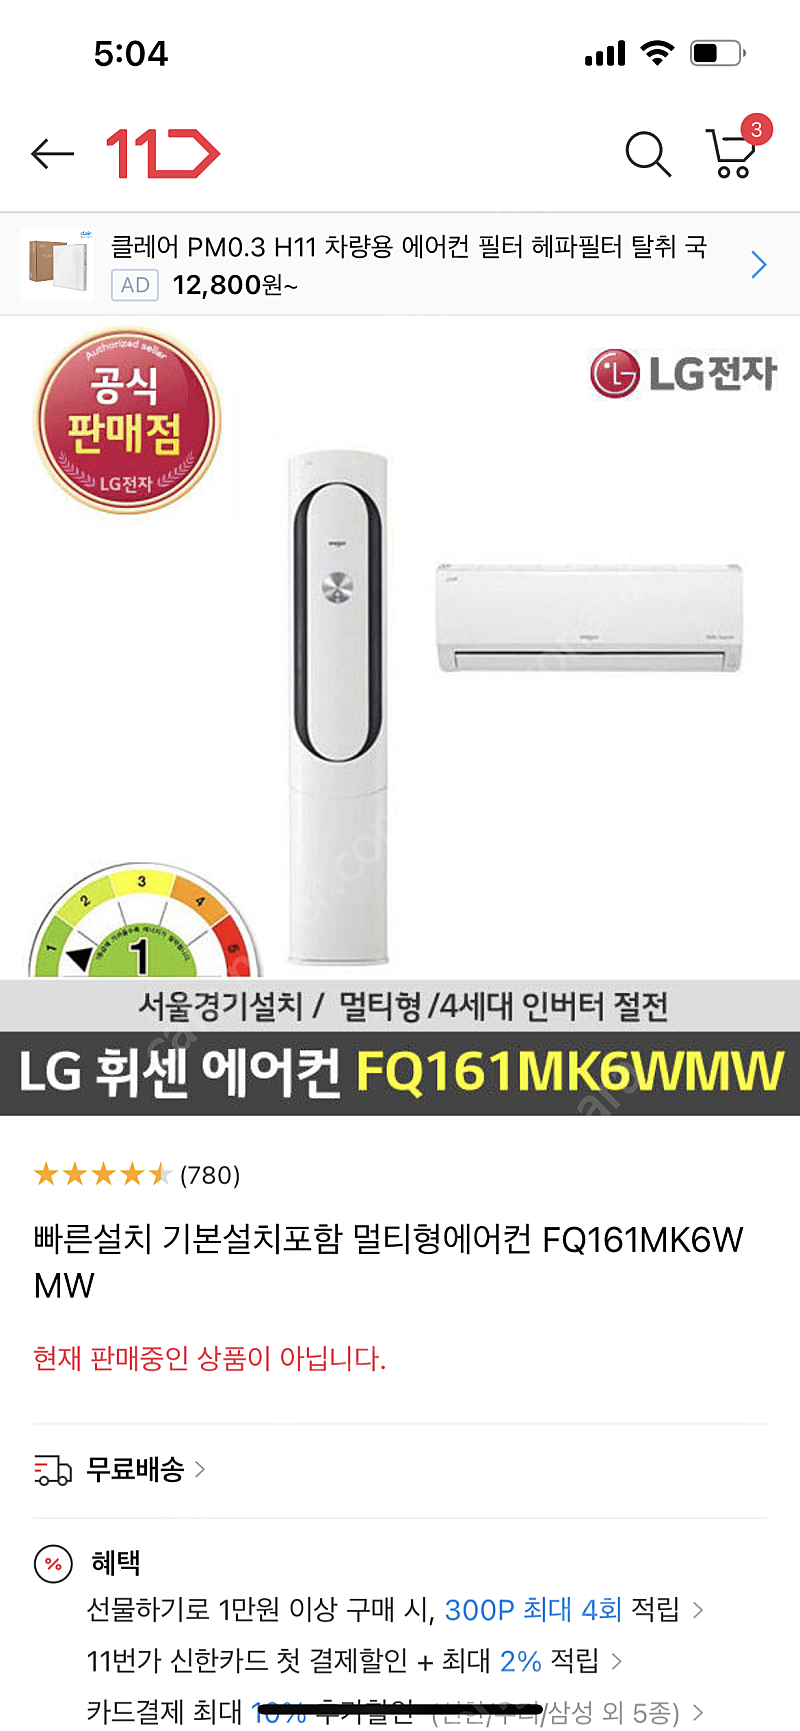 LG 에어컨 2 in 1 판매 (FQ161MK6WMW)